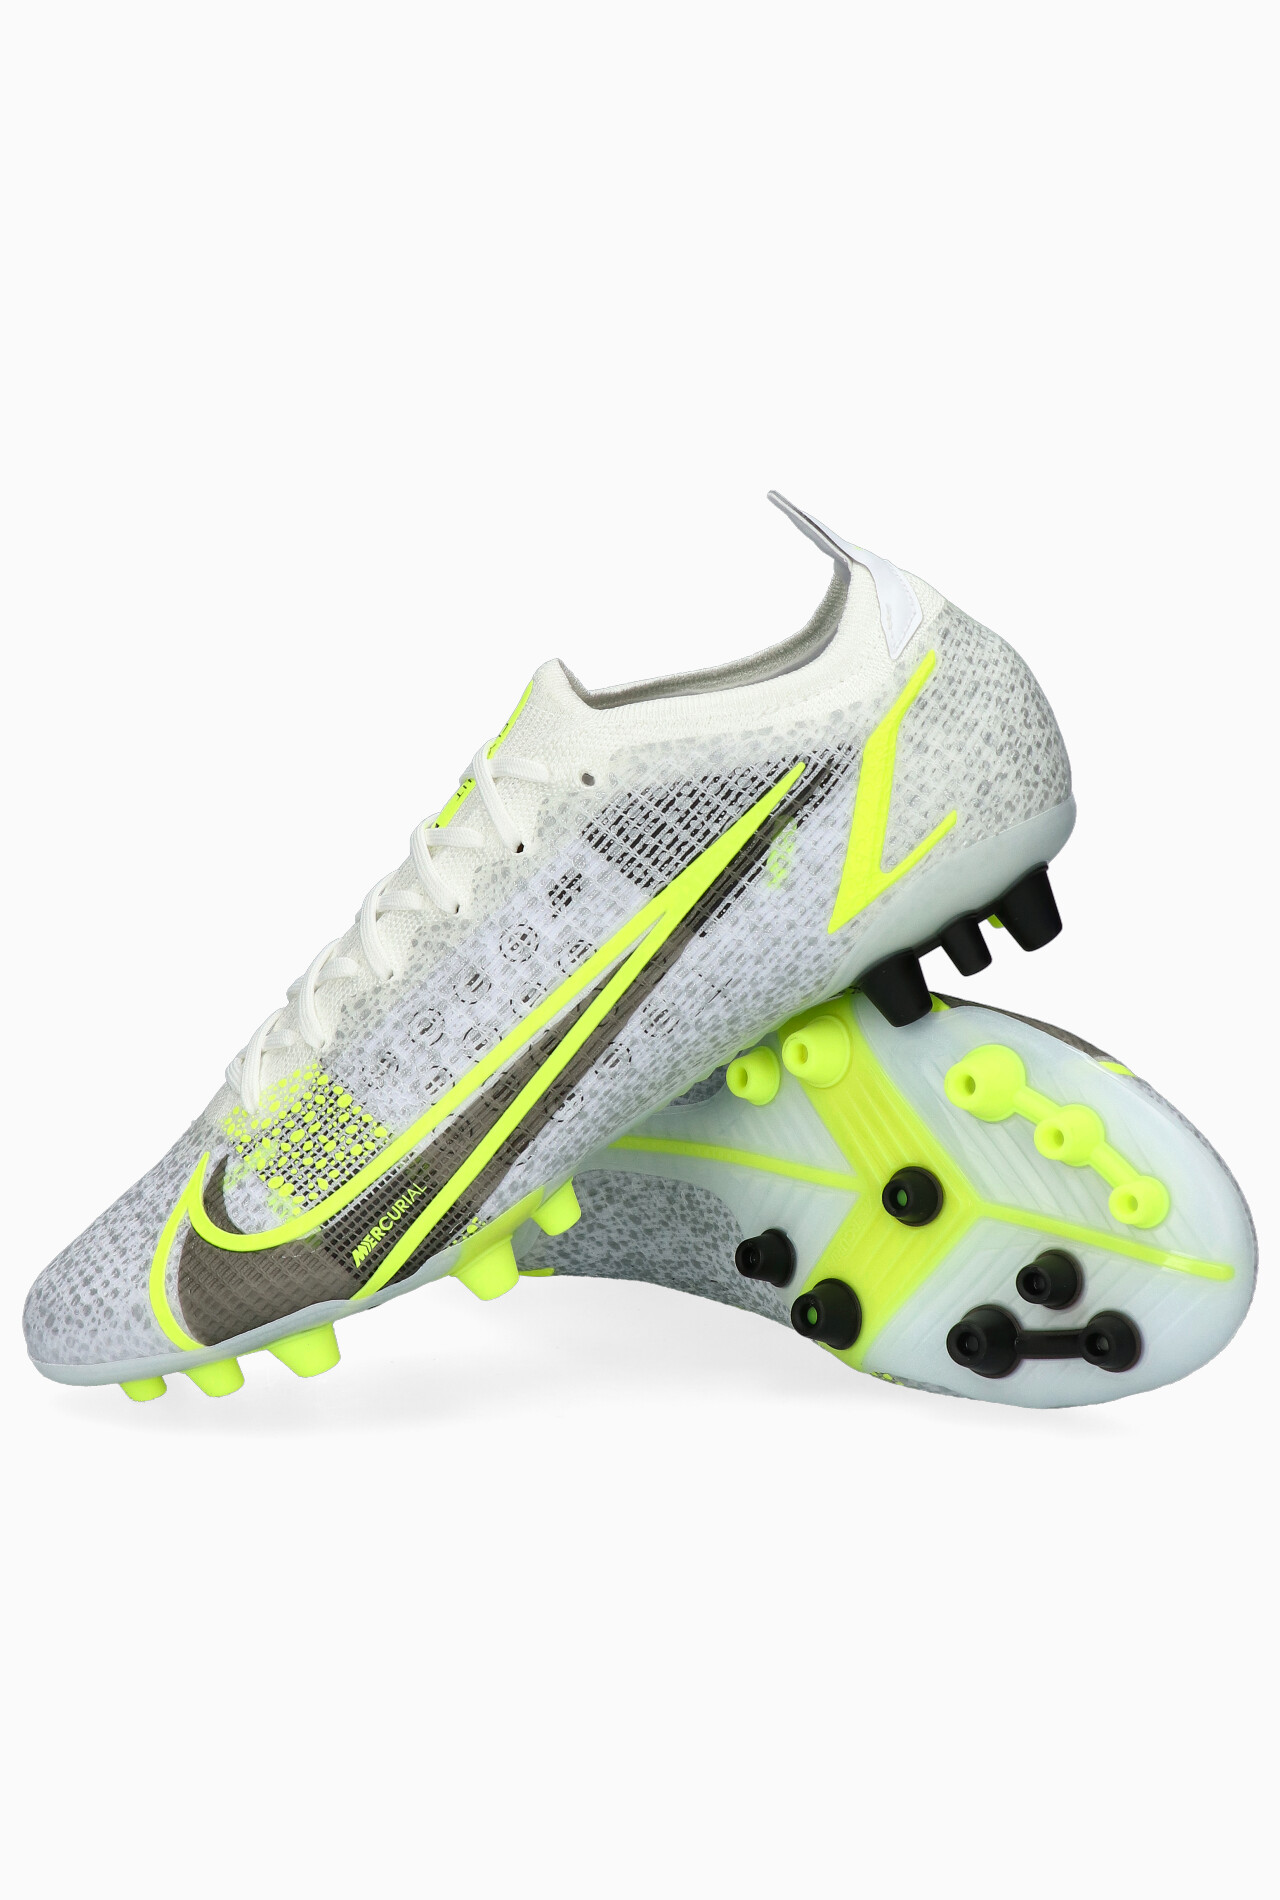 Cleats Nike Mercurial Vapor 14 Elite Ag R Gol Com Football Boots Equipment